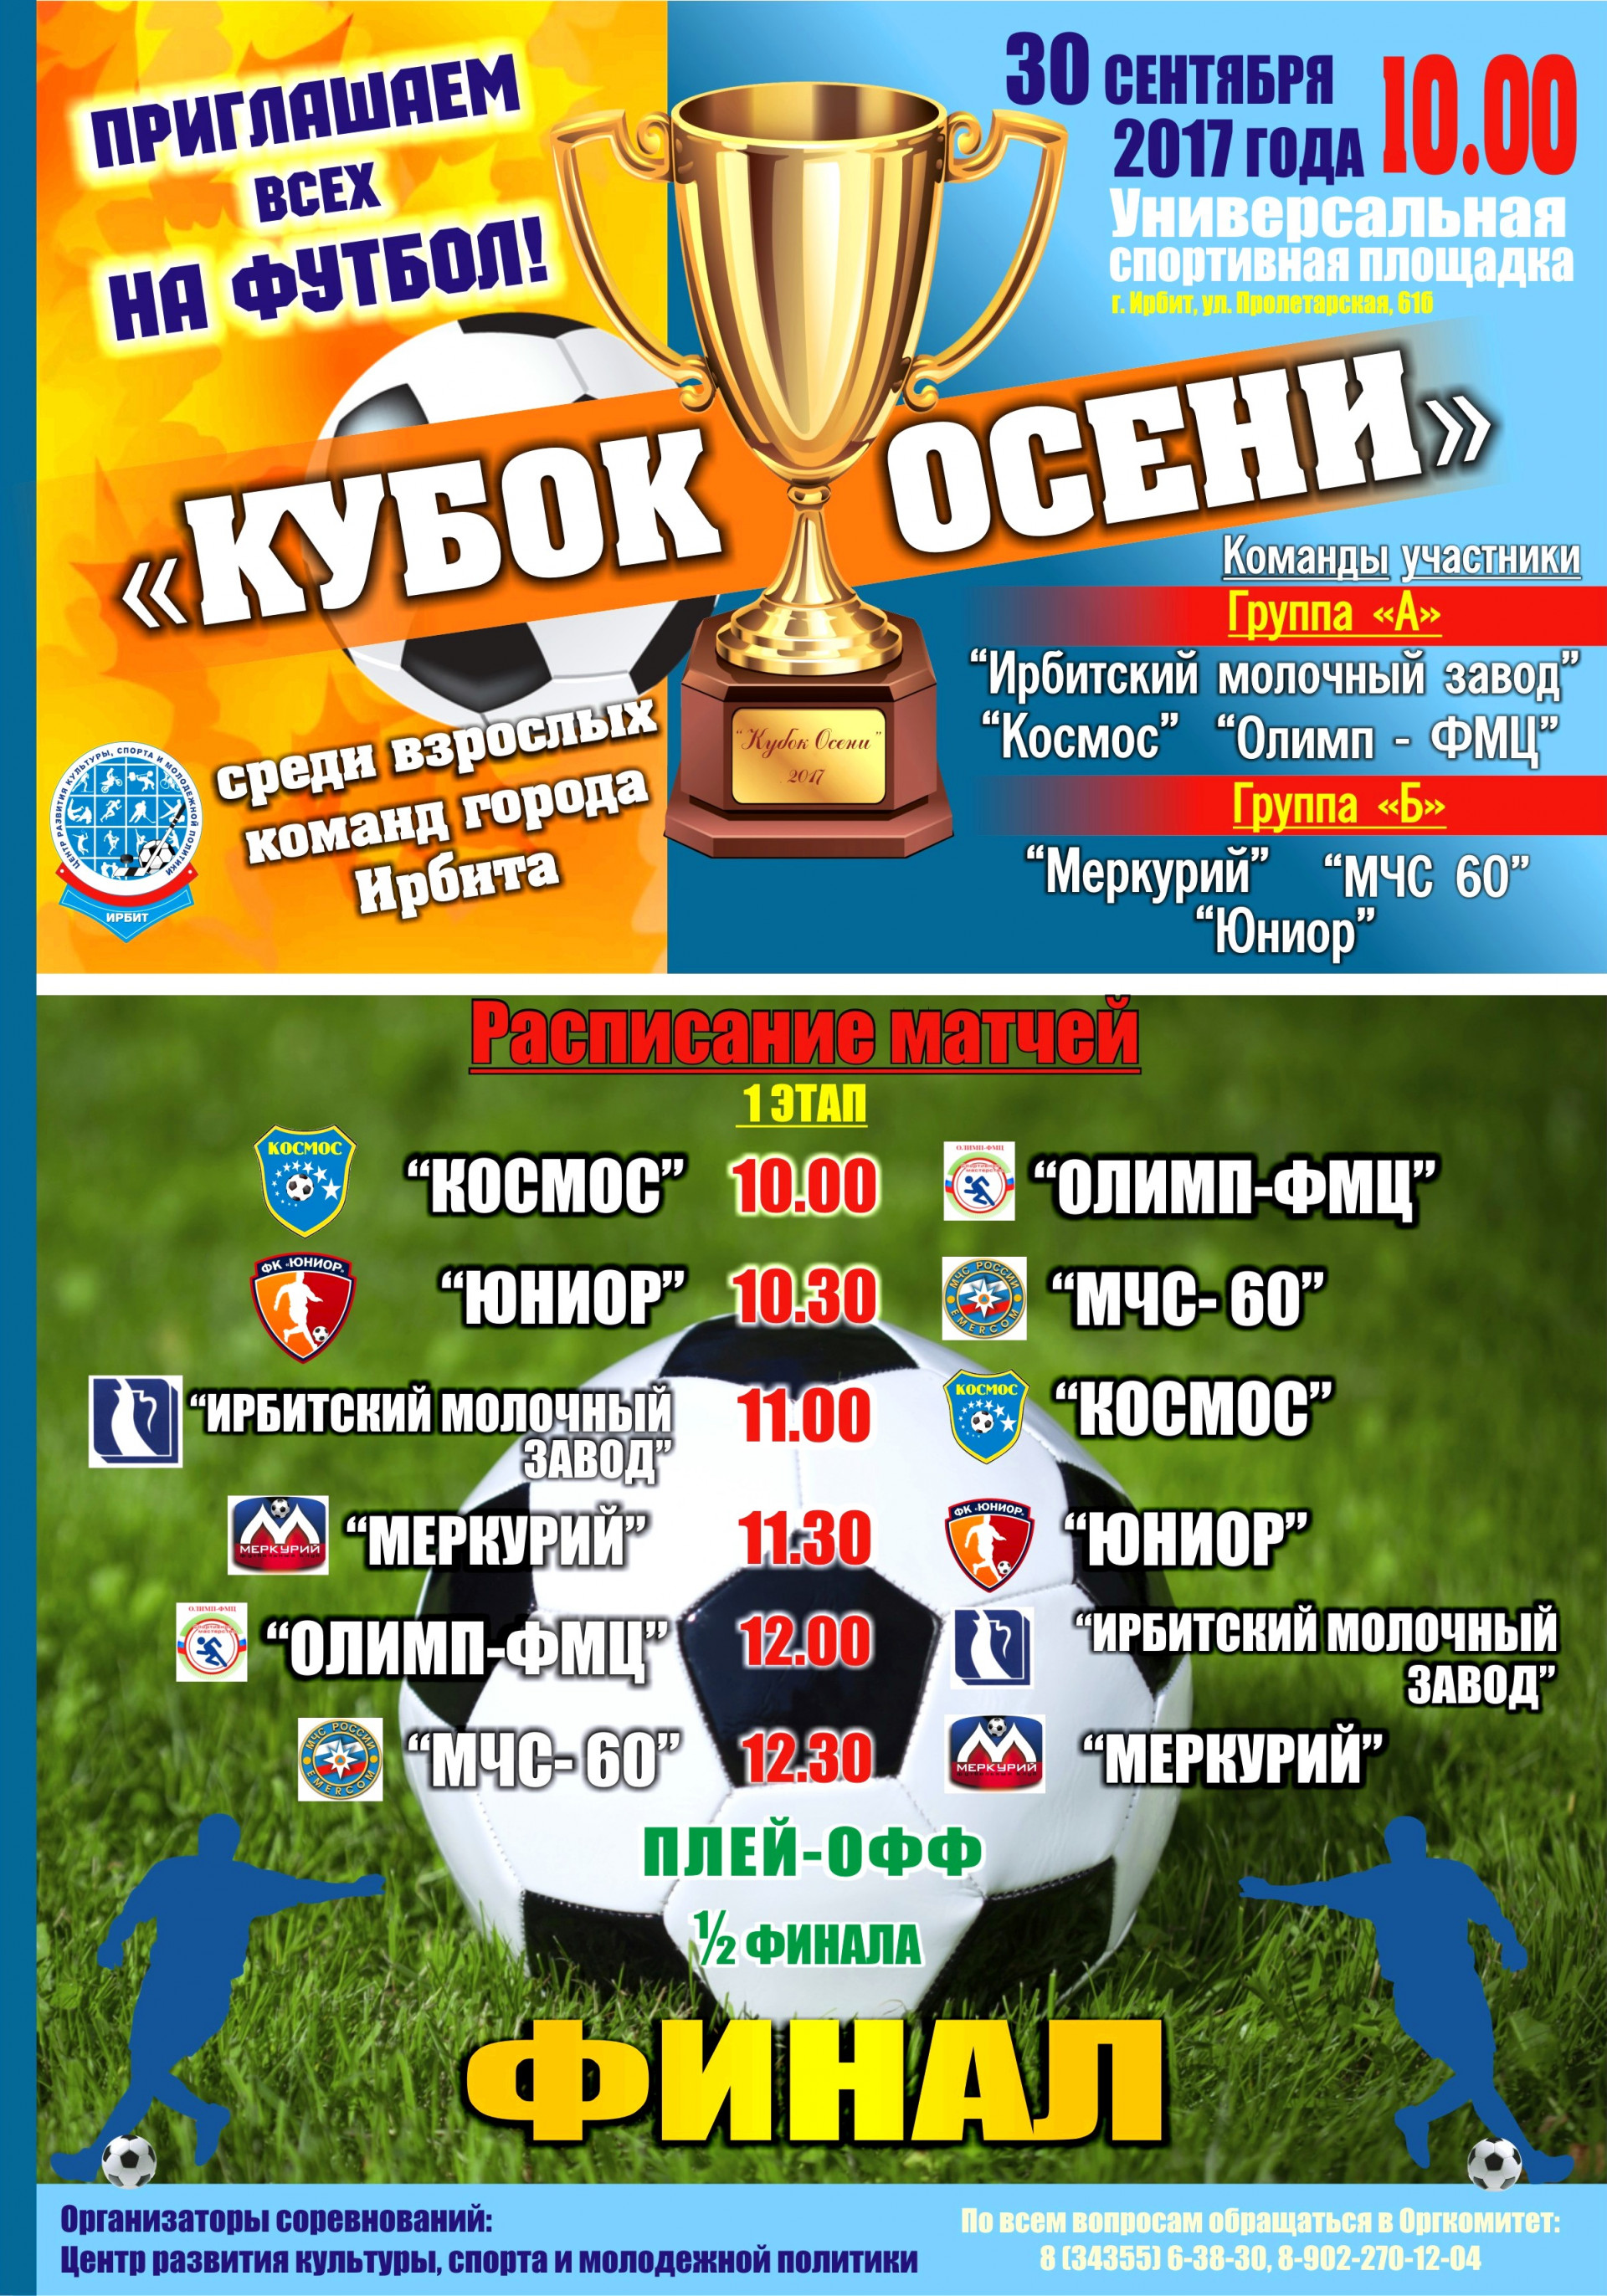 «Кубок Осени» по футболу среди взрослых команд города Ирбита